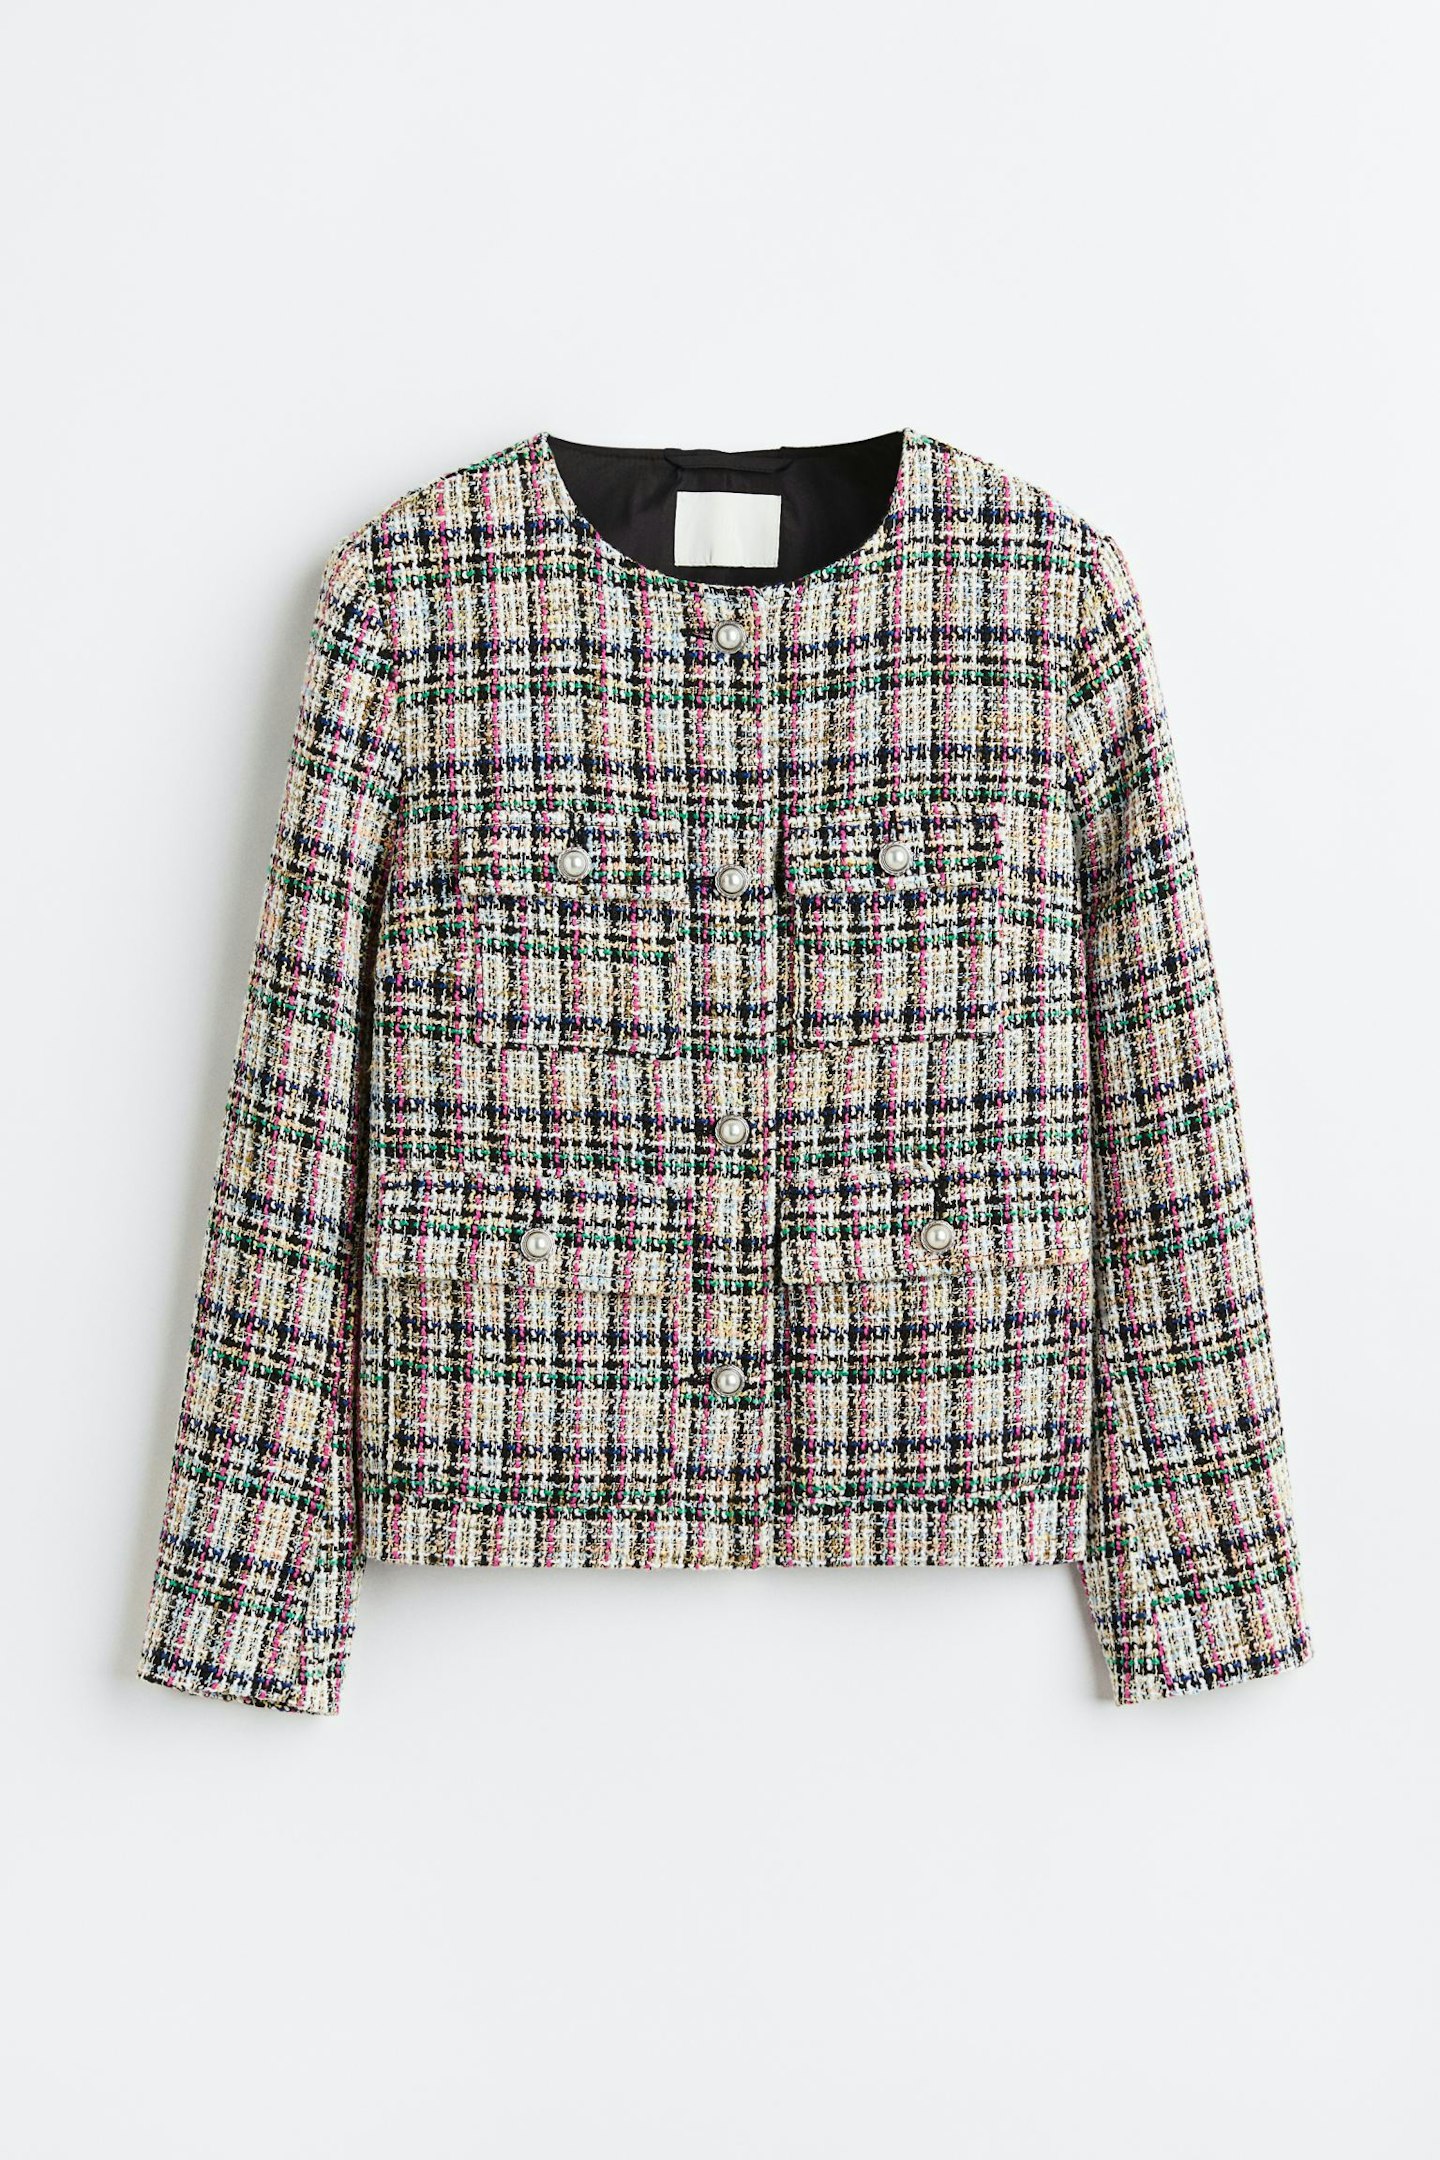 H&M Textured-Weave Jacket